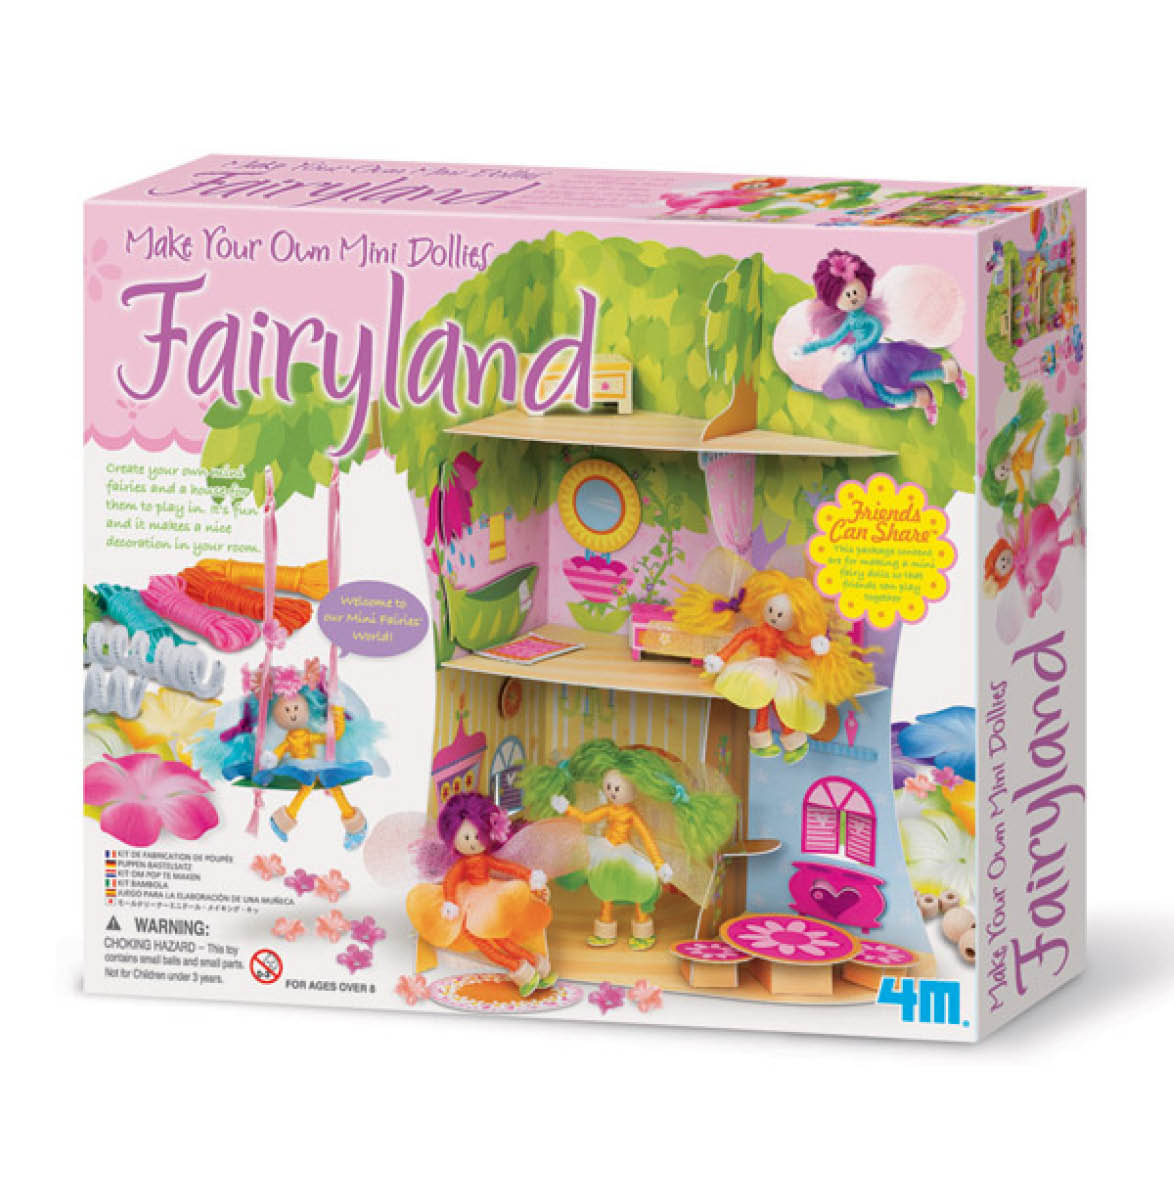 Make Your Own Mini Dollies Fairyland Craft Kit